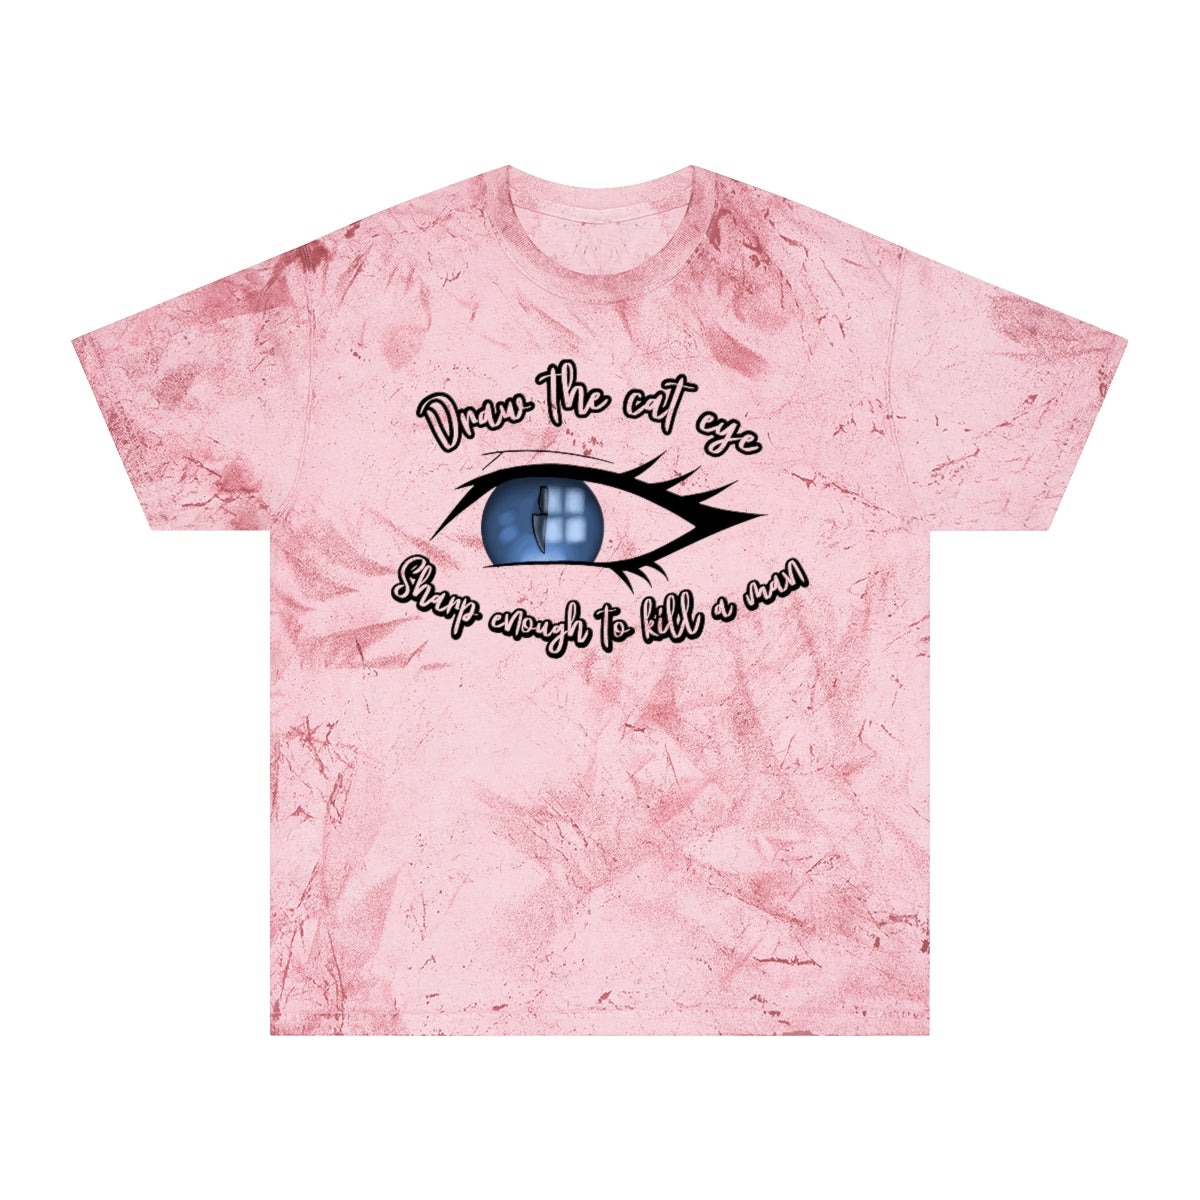 Taylor Swift Lyrics T-Shirt | Midnight Shirt | Draw the cat eye sharp enough | Swifties Shirt | Eras Tour Shirt